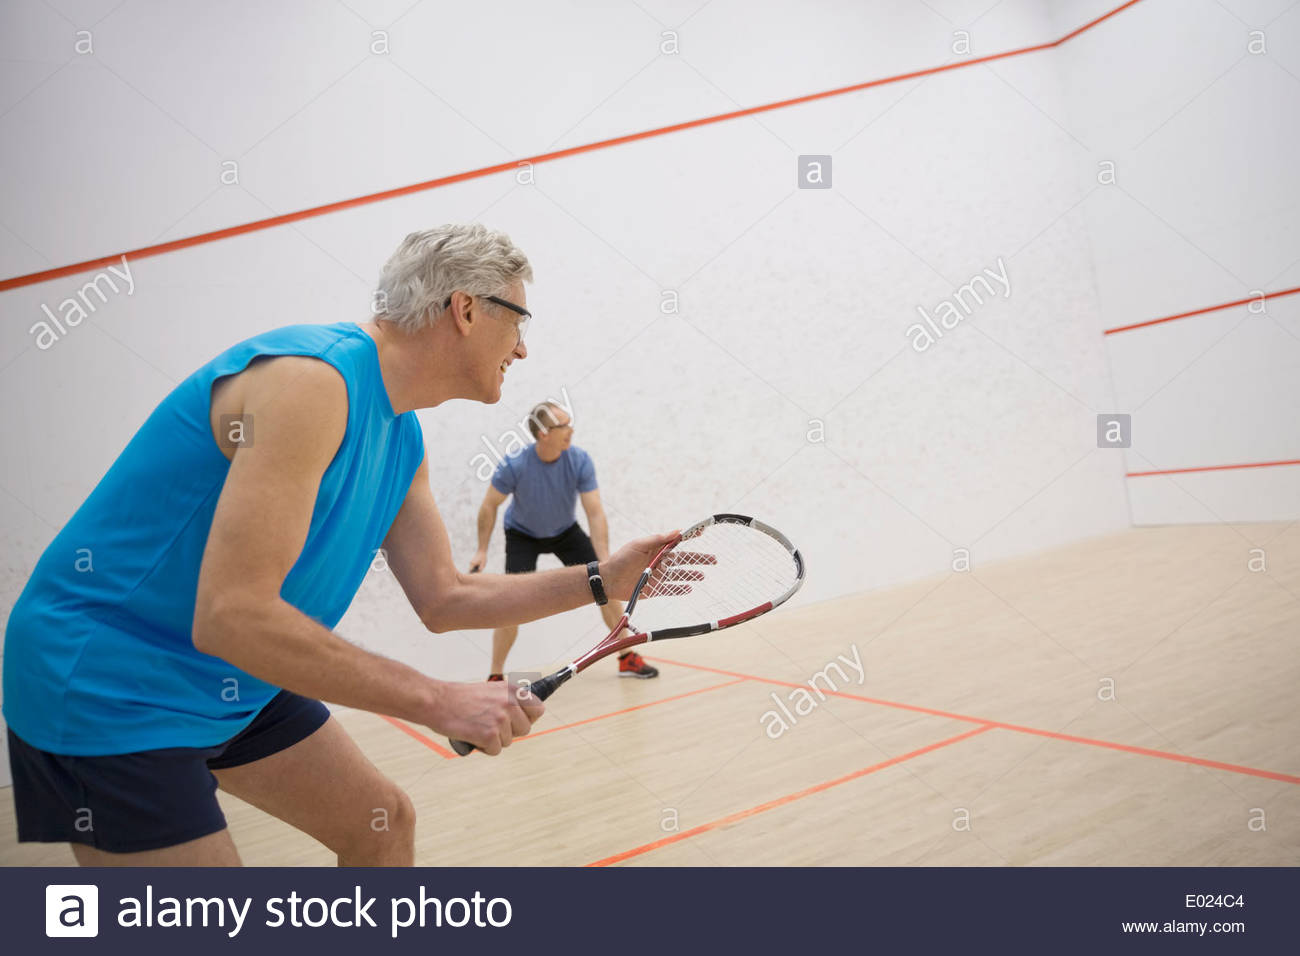 Men playing squash on court Stock Photo